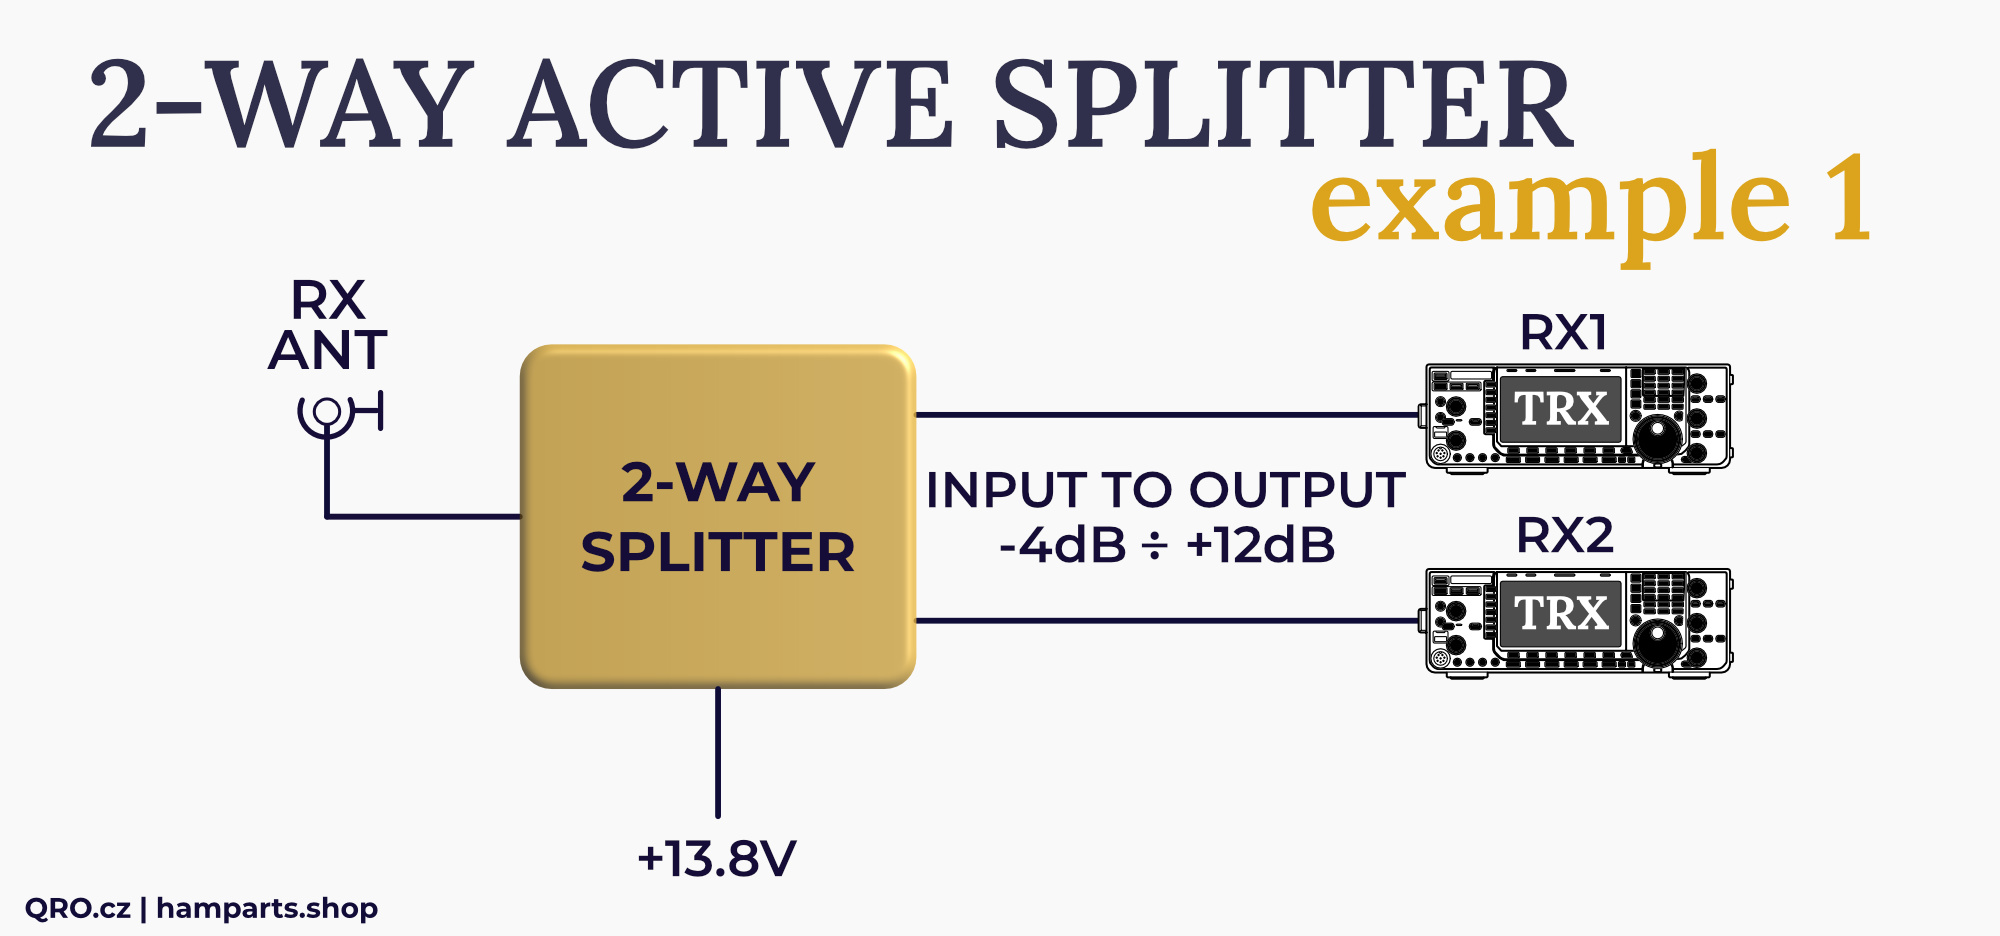 2-way active splitter by qro.cz hamparts.shop